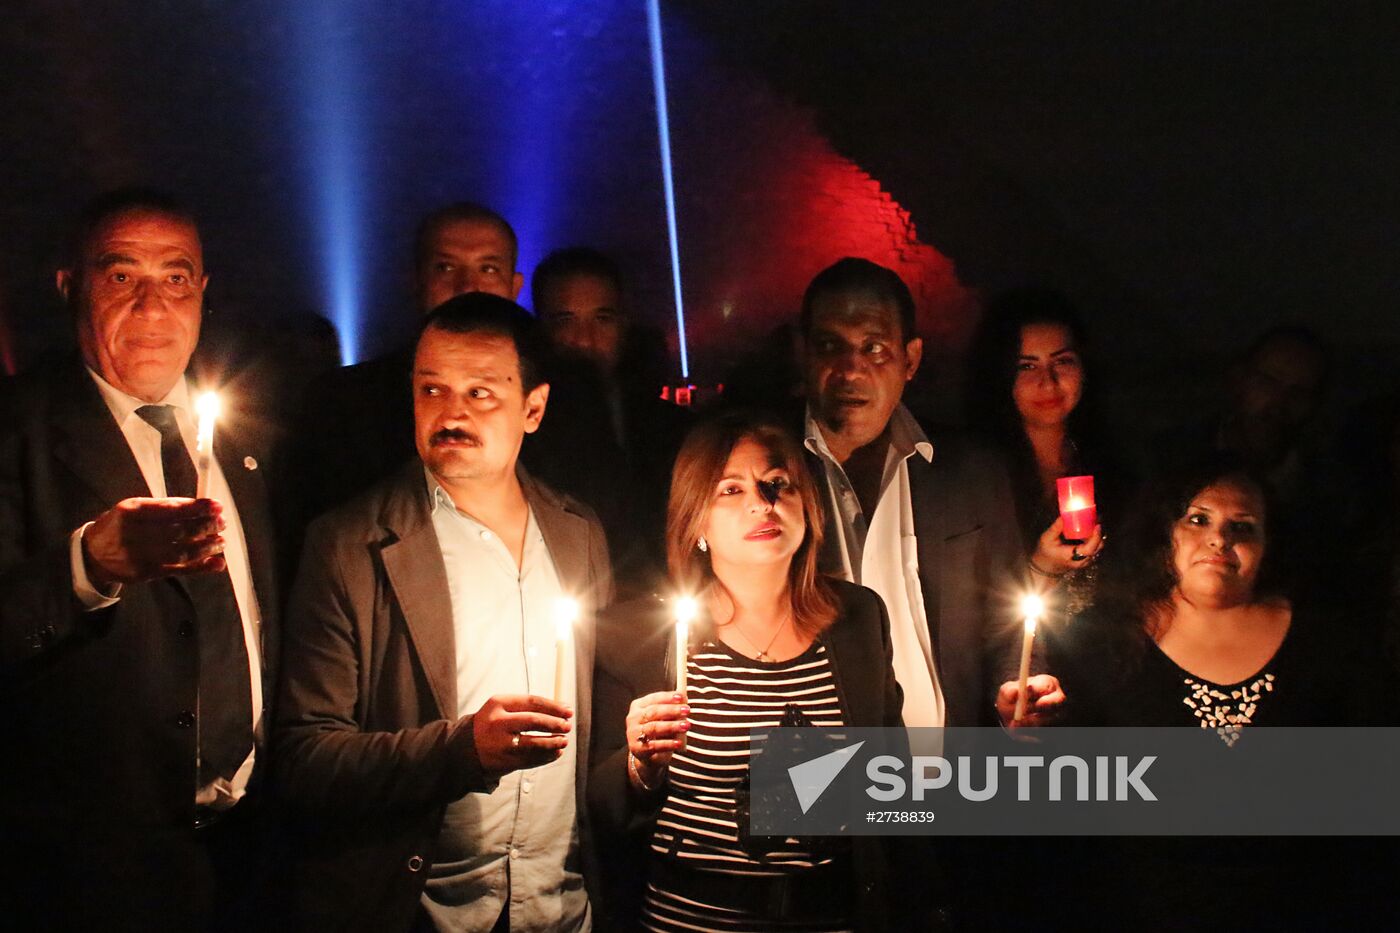 Memorial event for victims of Russian A321 crash and Paris terrorist attacks